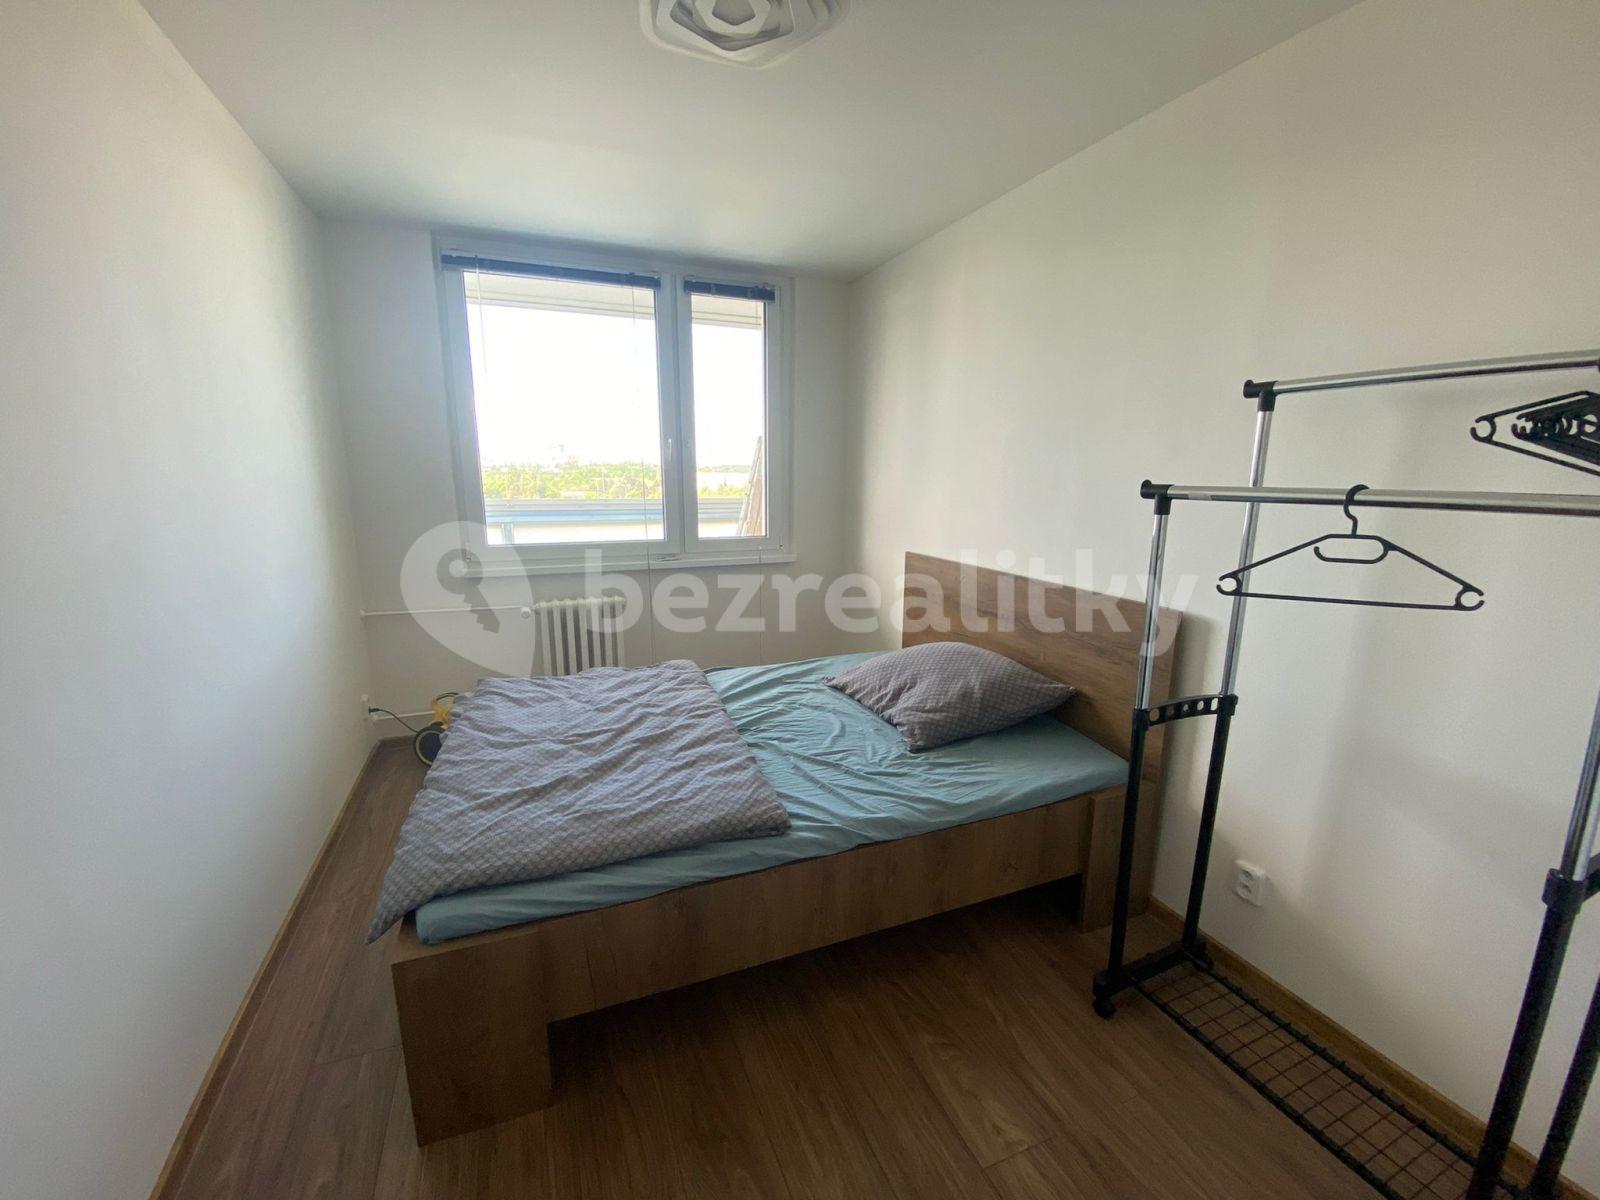 1 bedroom with open-plan kitchen flat to rent, 50 m², Kurčatovova, Prague, Prague